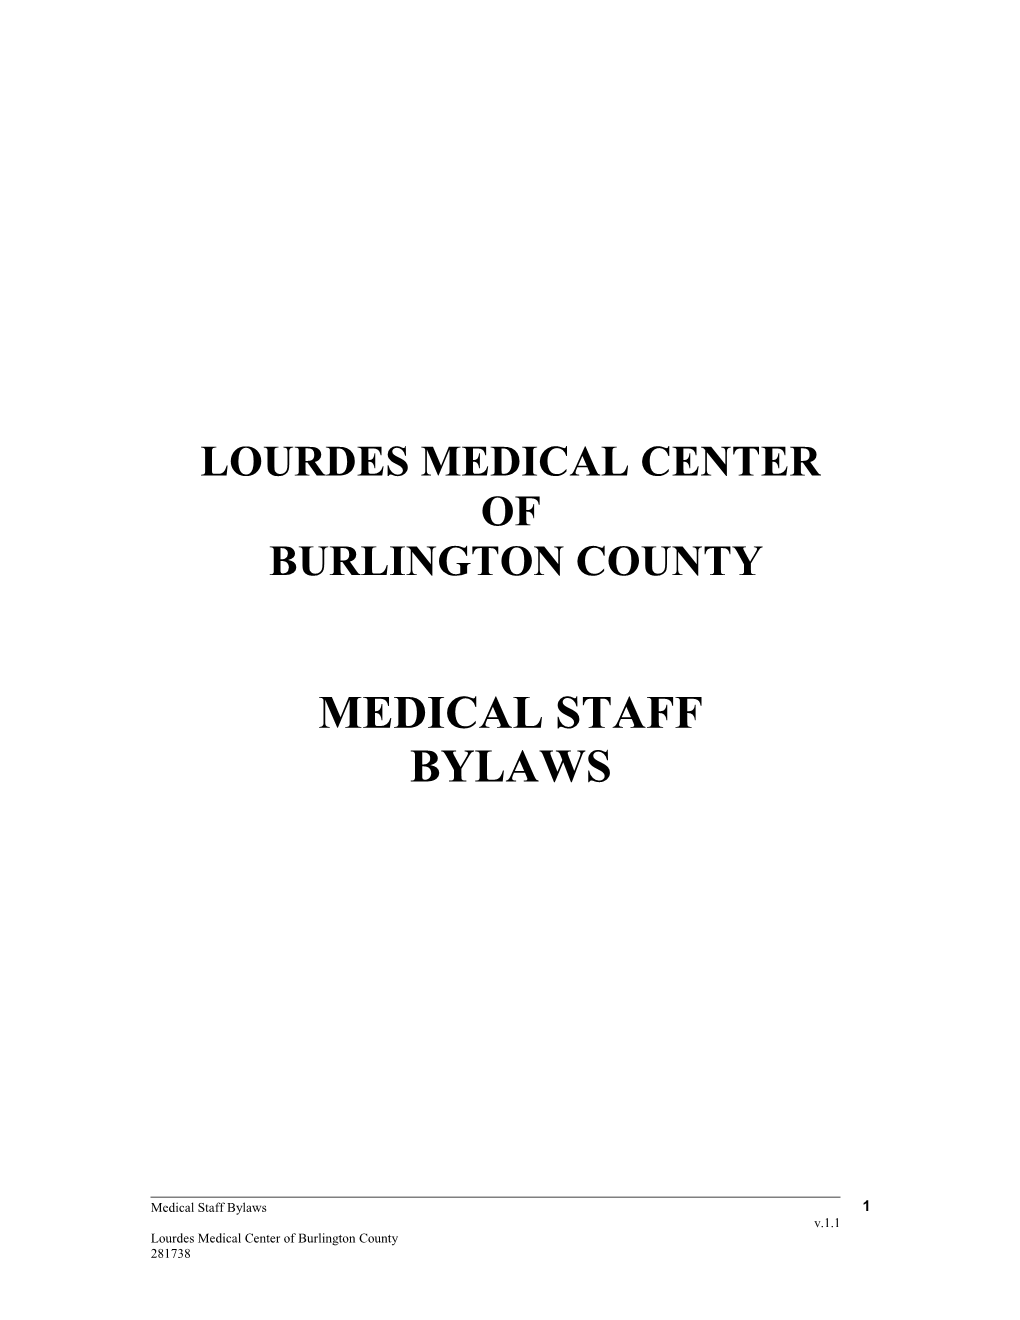 Lourdes Medical Center